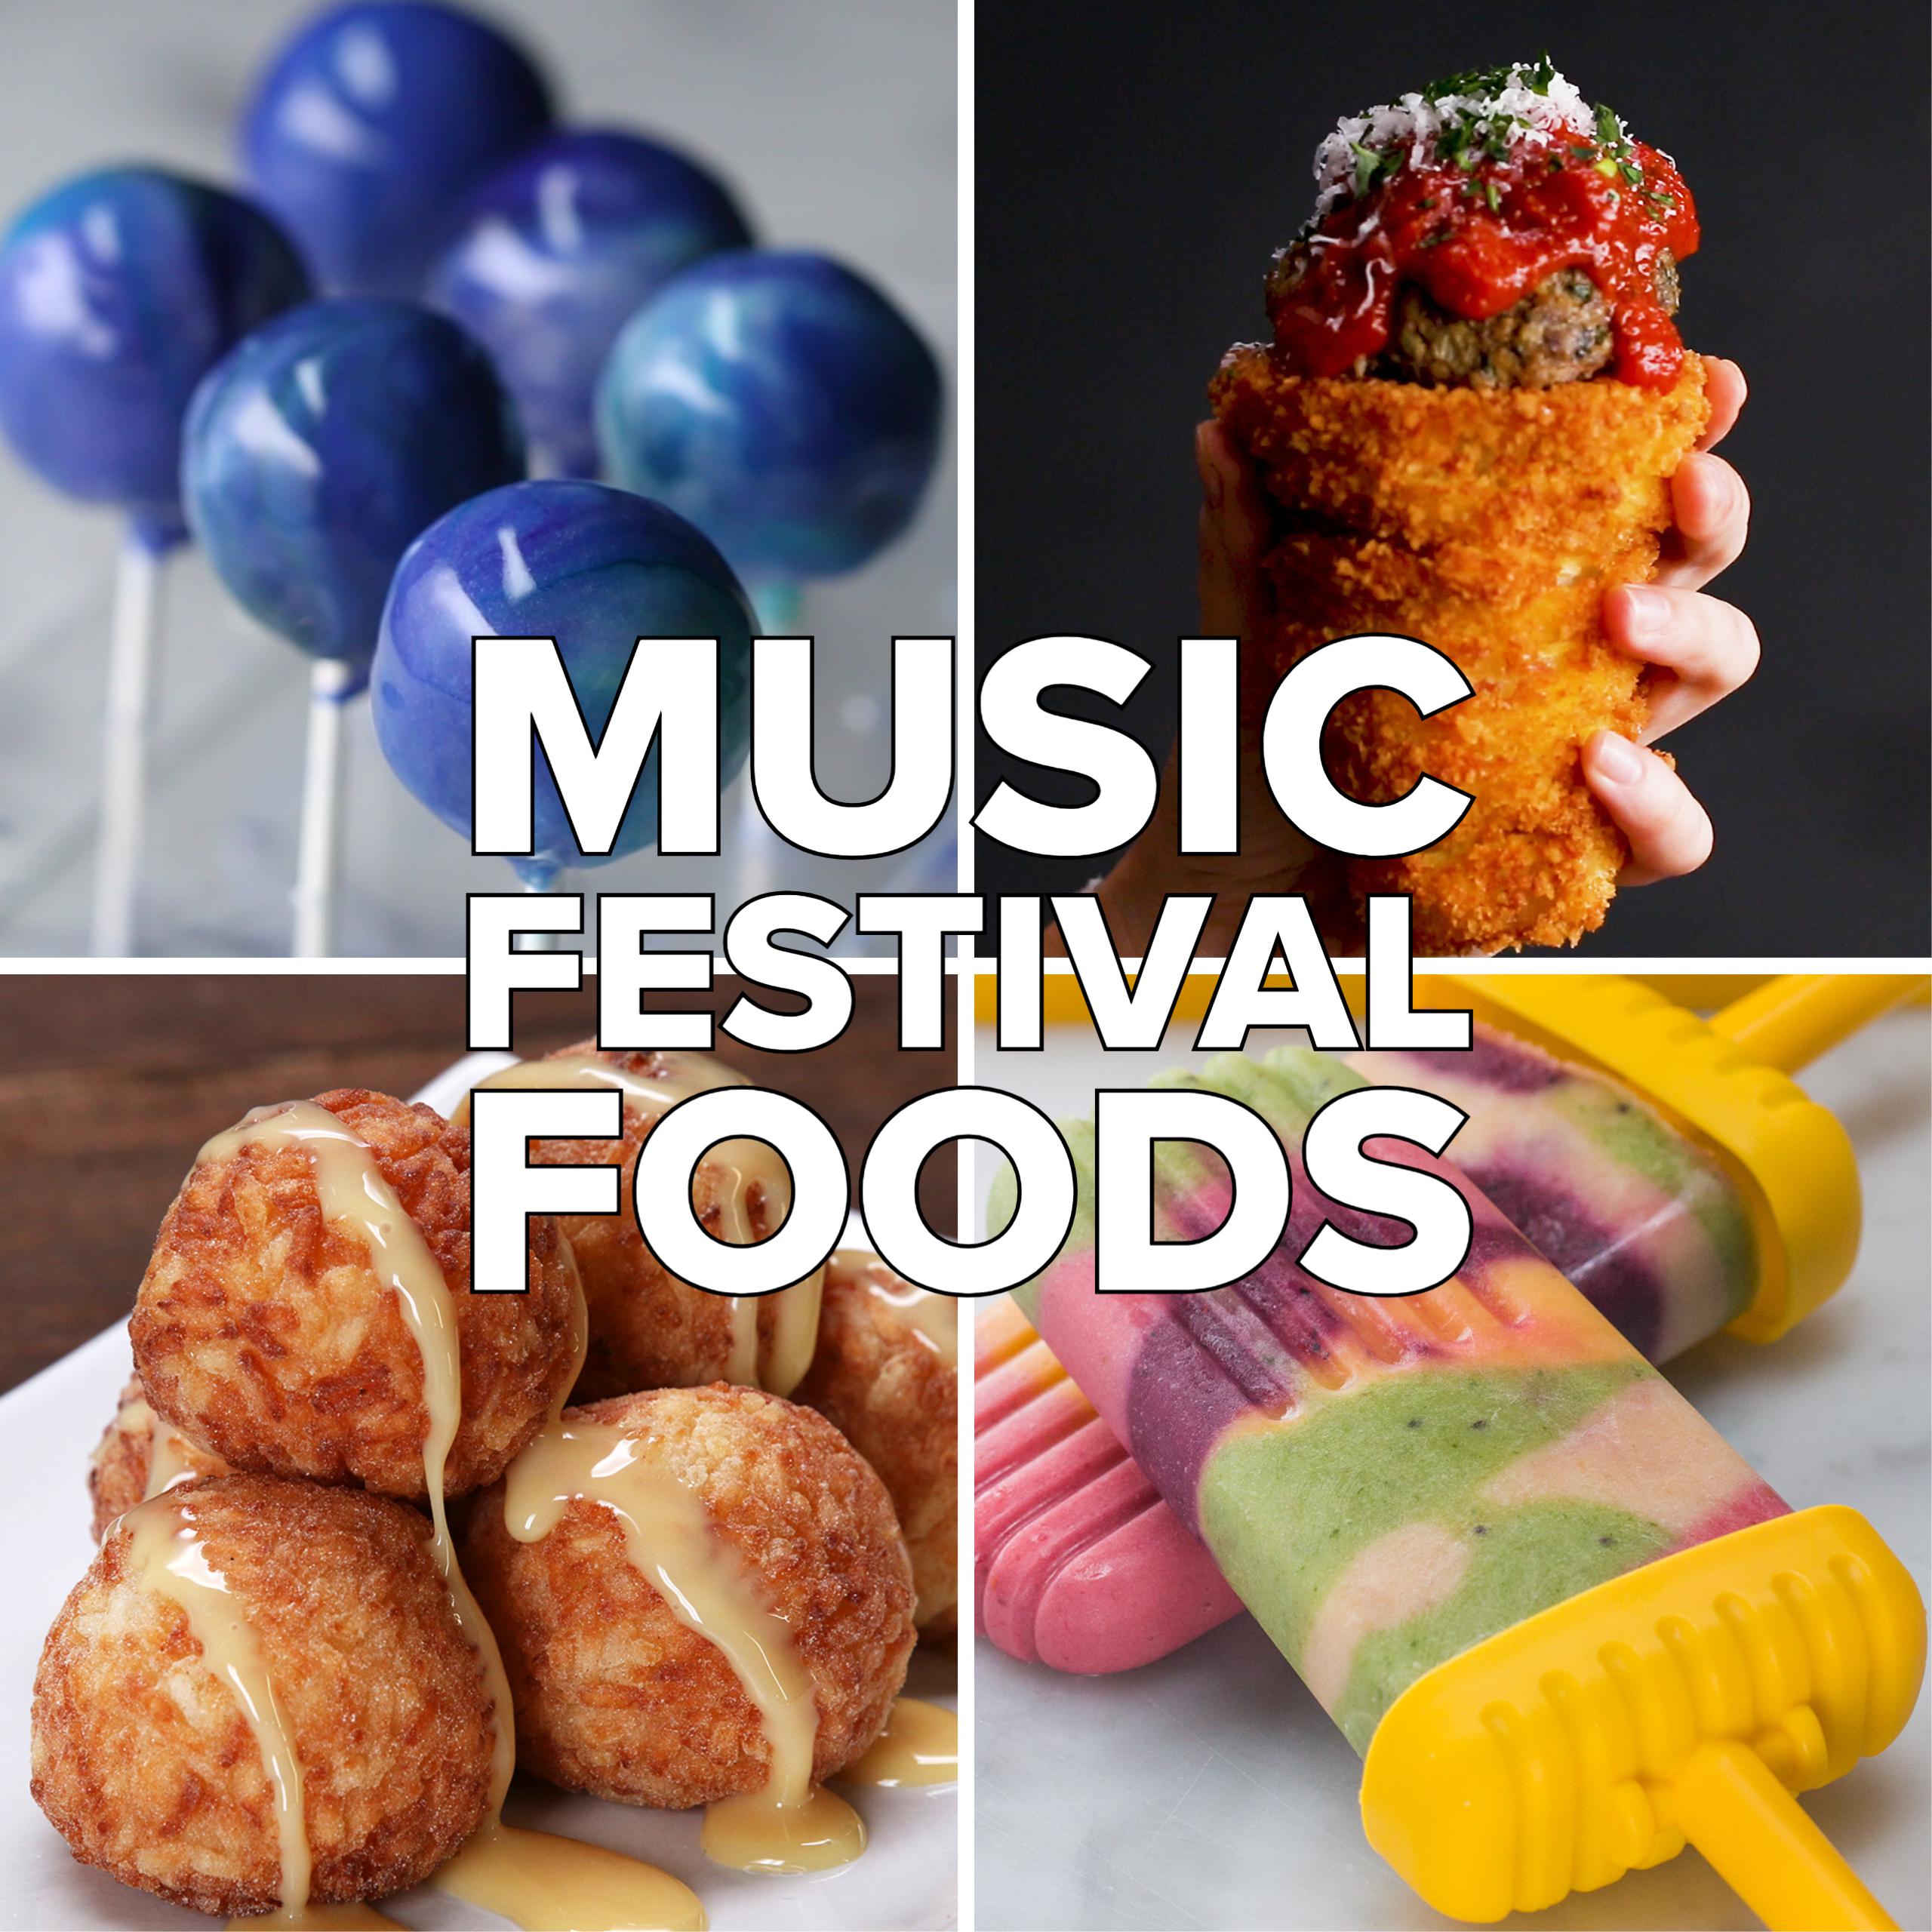 Music FestivalInspired Foods Recipes